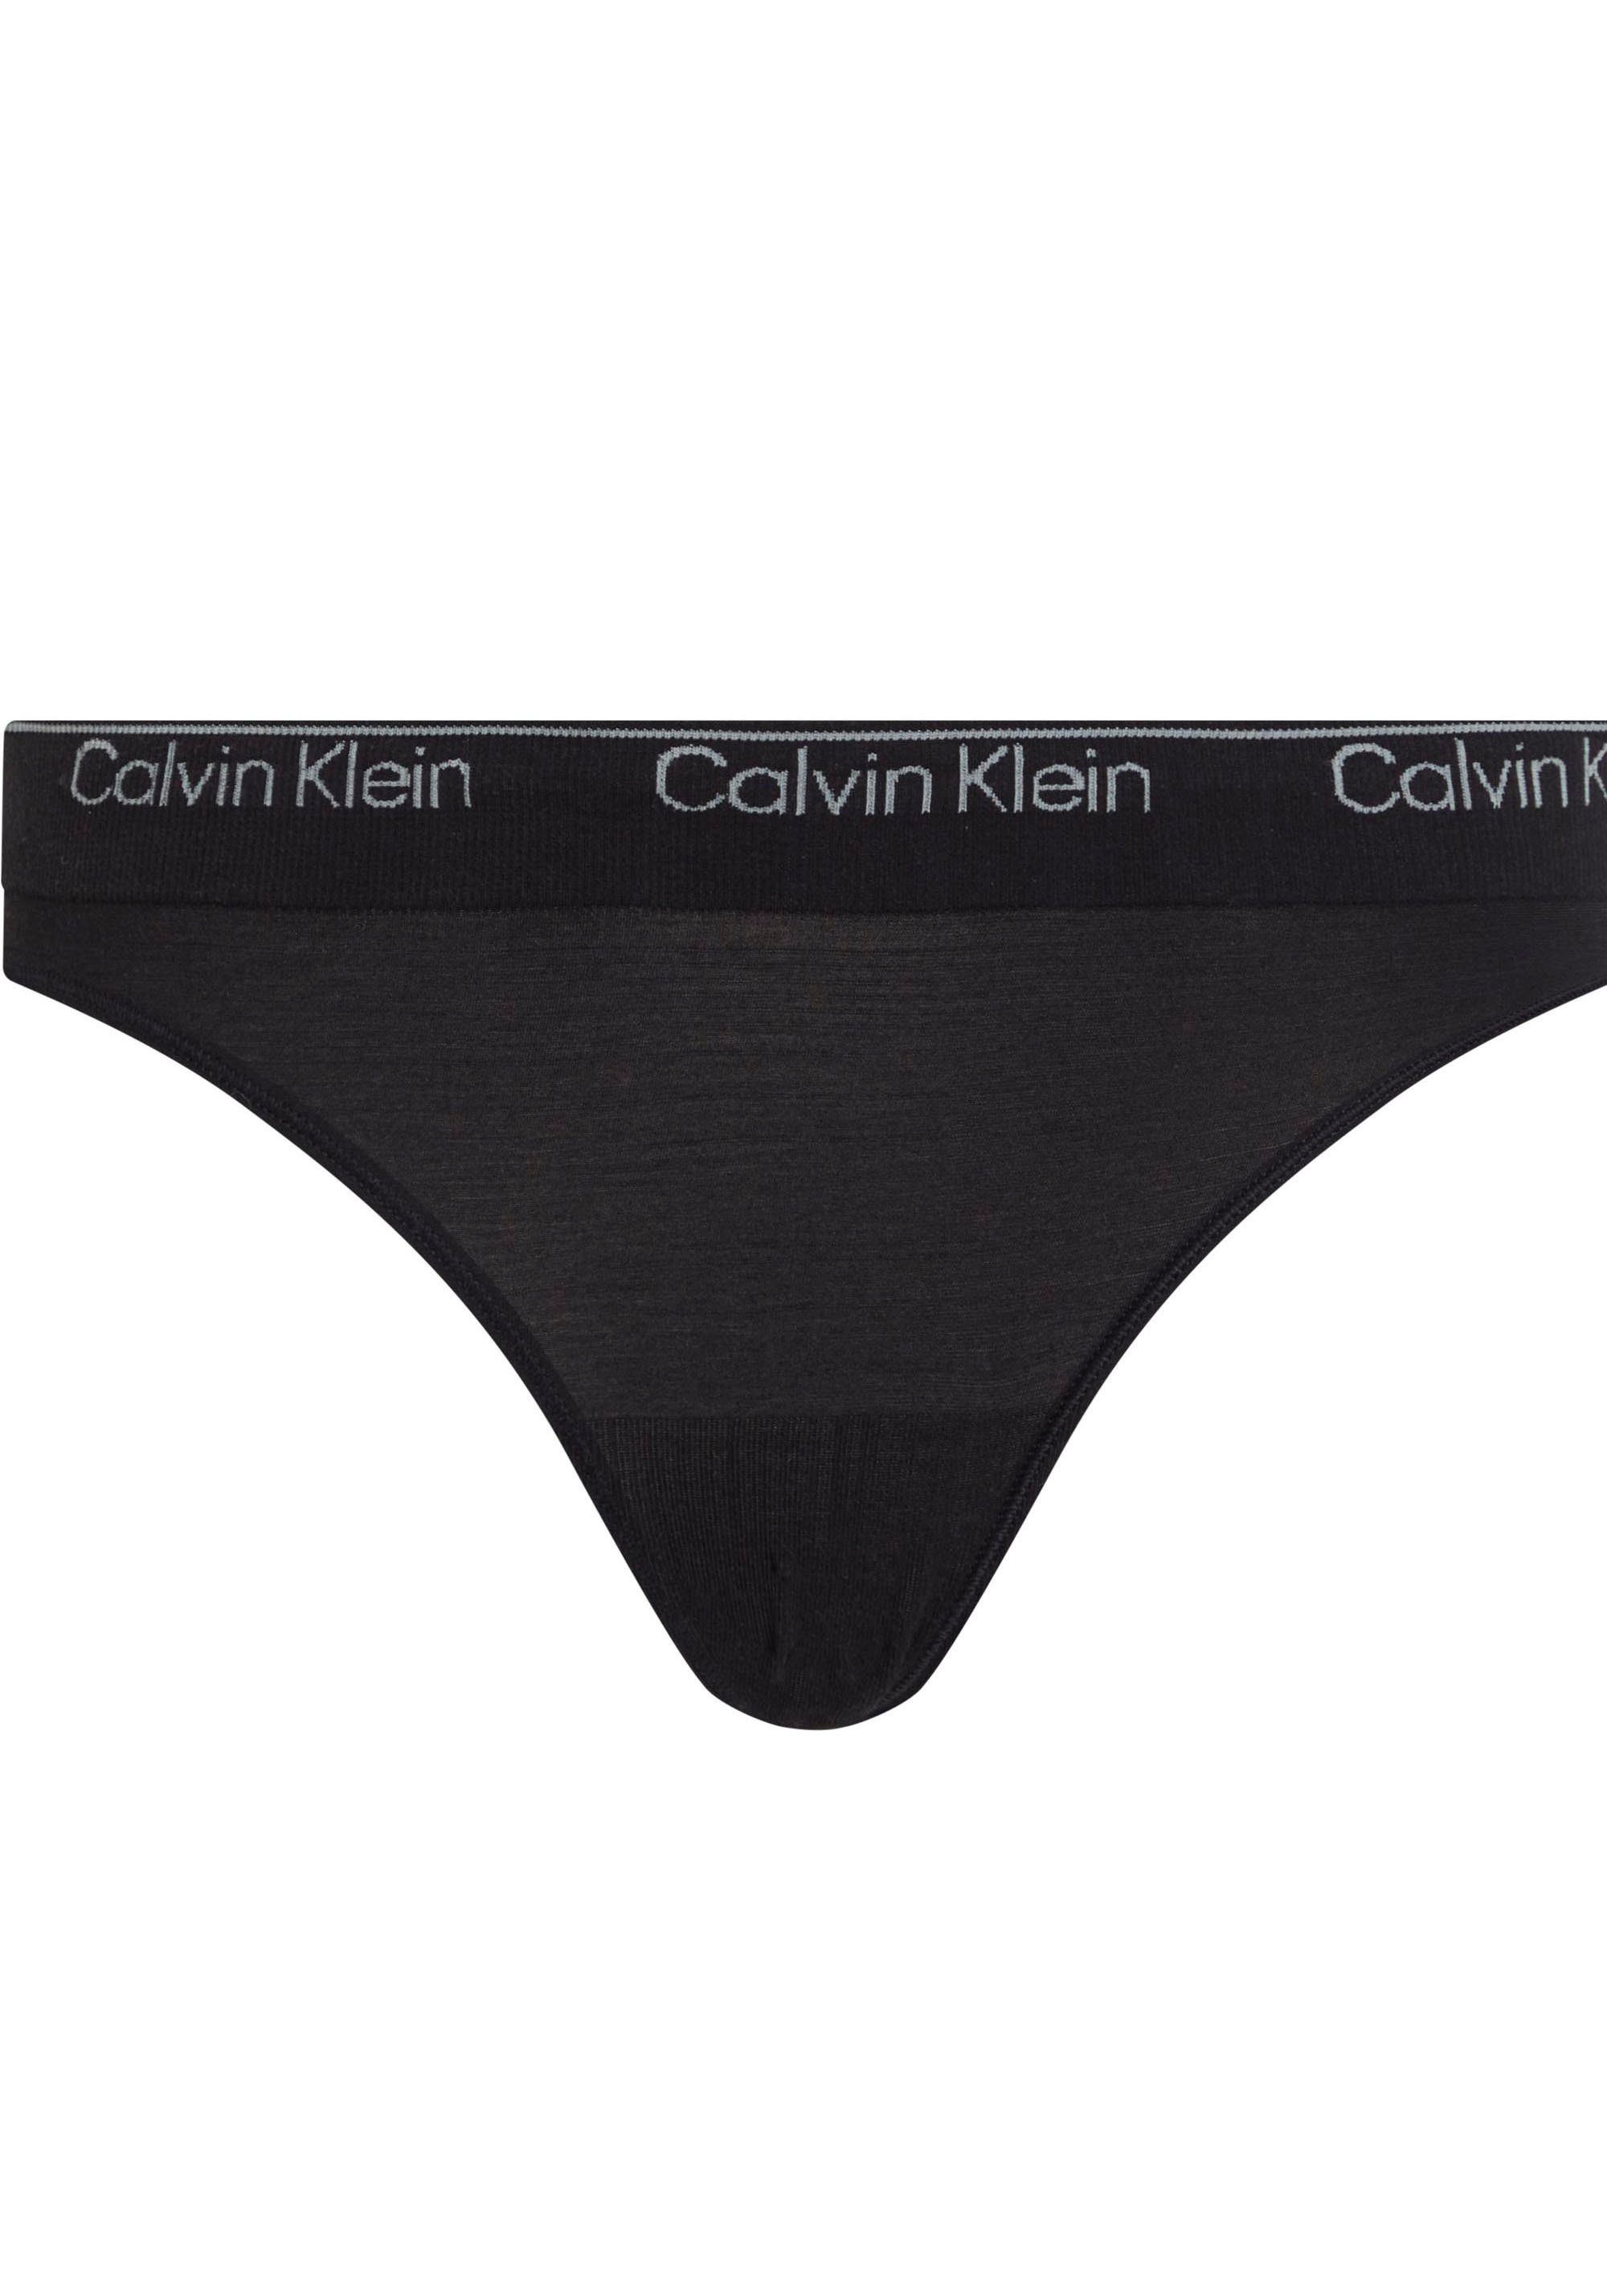 BIKINI Calvin CK-Logo Klein Underwear Calvin mit Bikinislip Bund, am Underwear Bikinislip Klein von